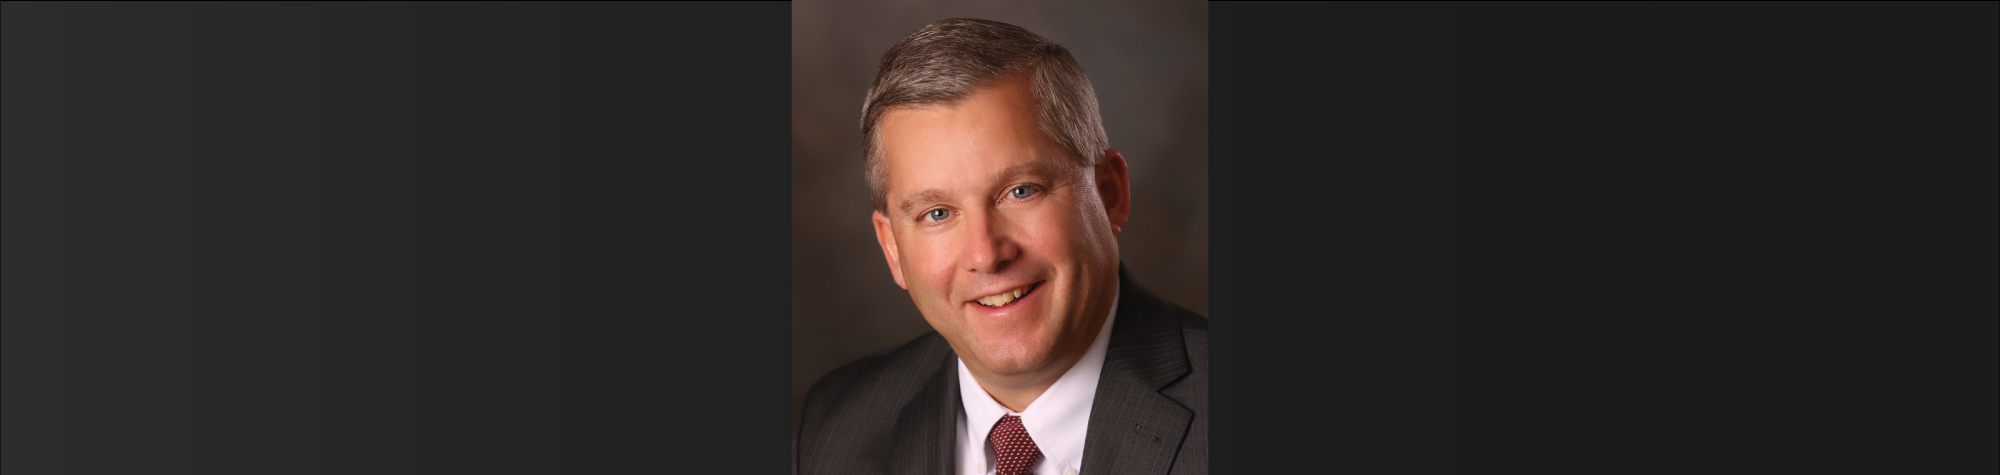 Merchants Insurance Group Promotes Scott Behrent to Vice President, National Distribution